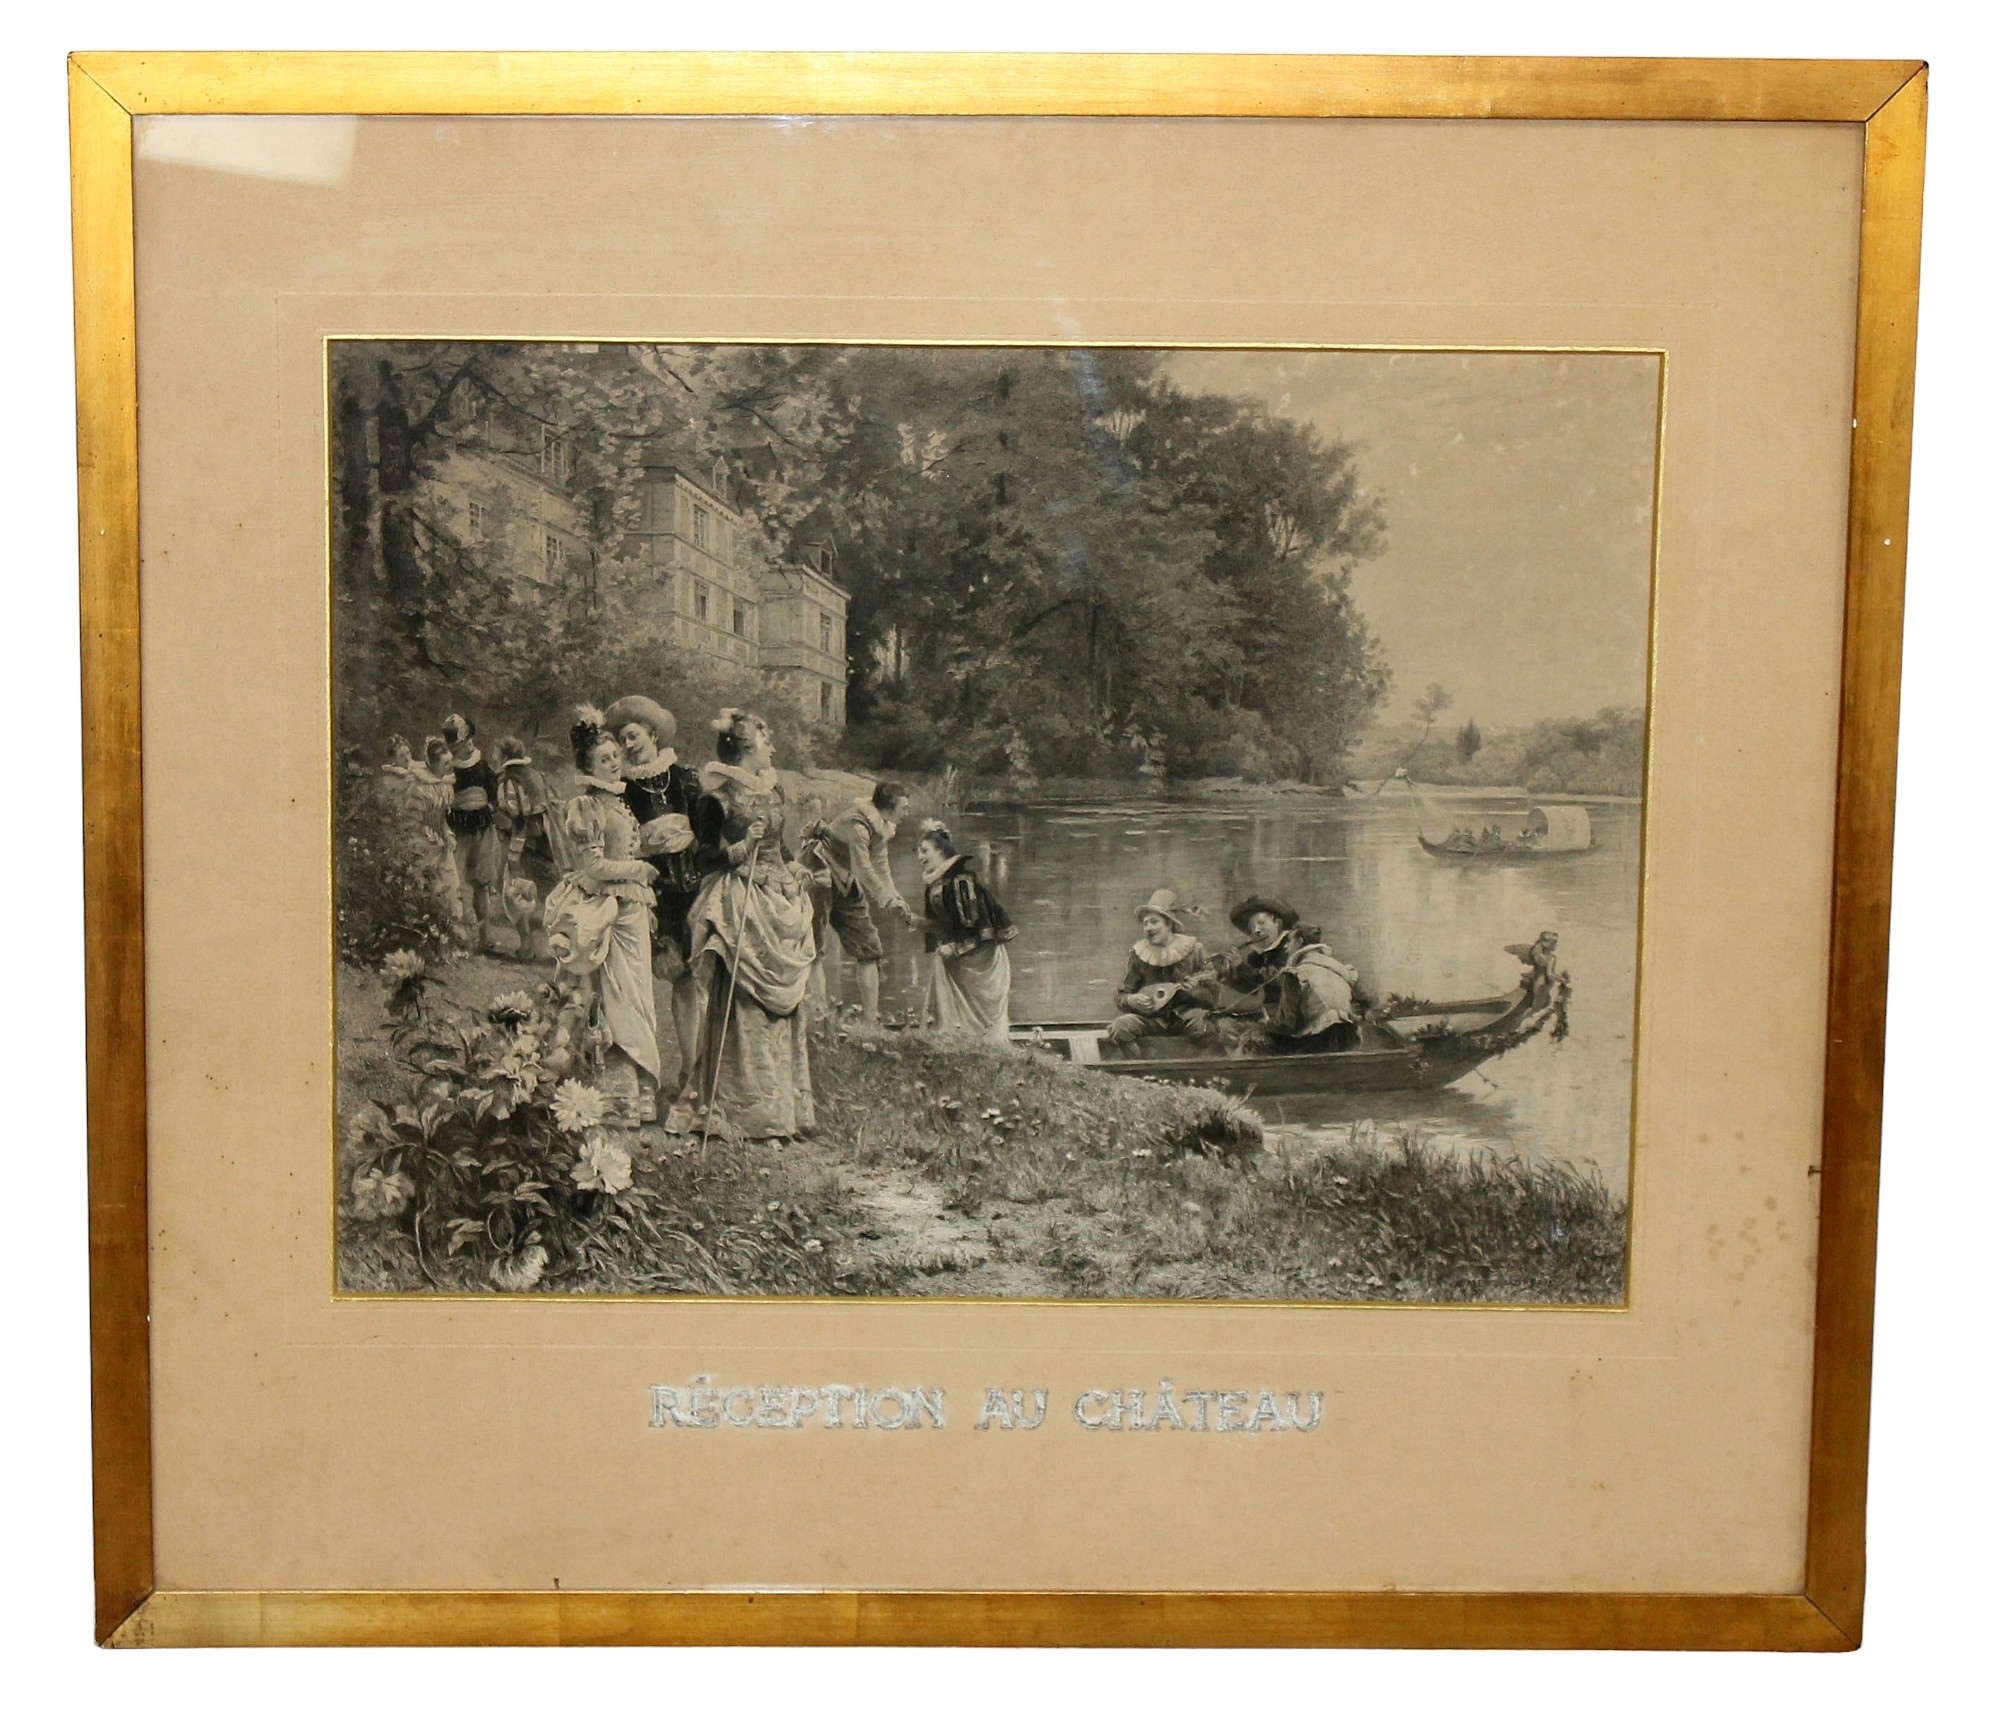 Antique "Reception Au Chateau" framed etching